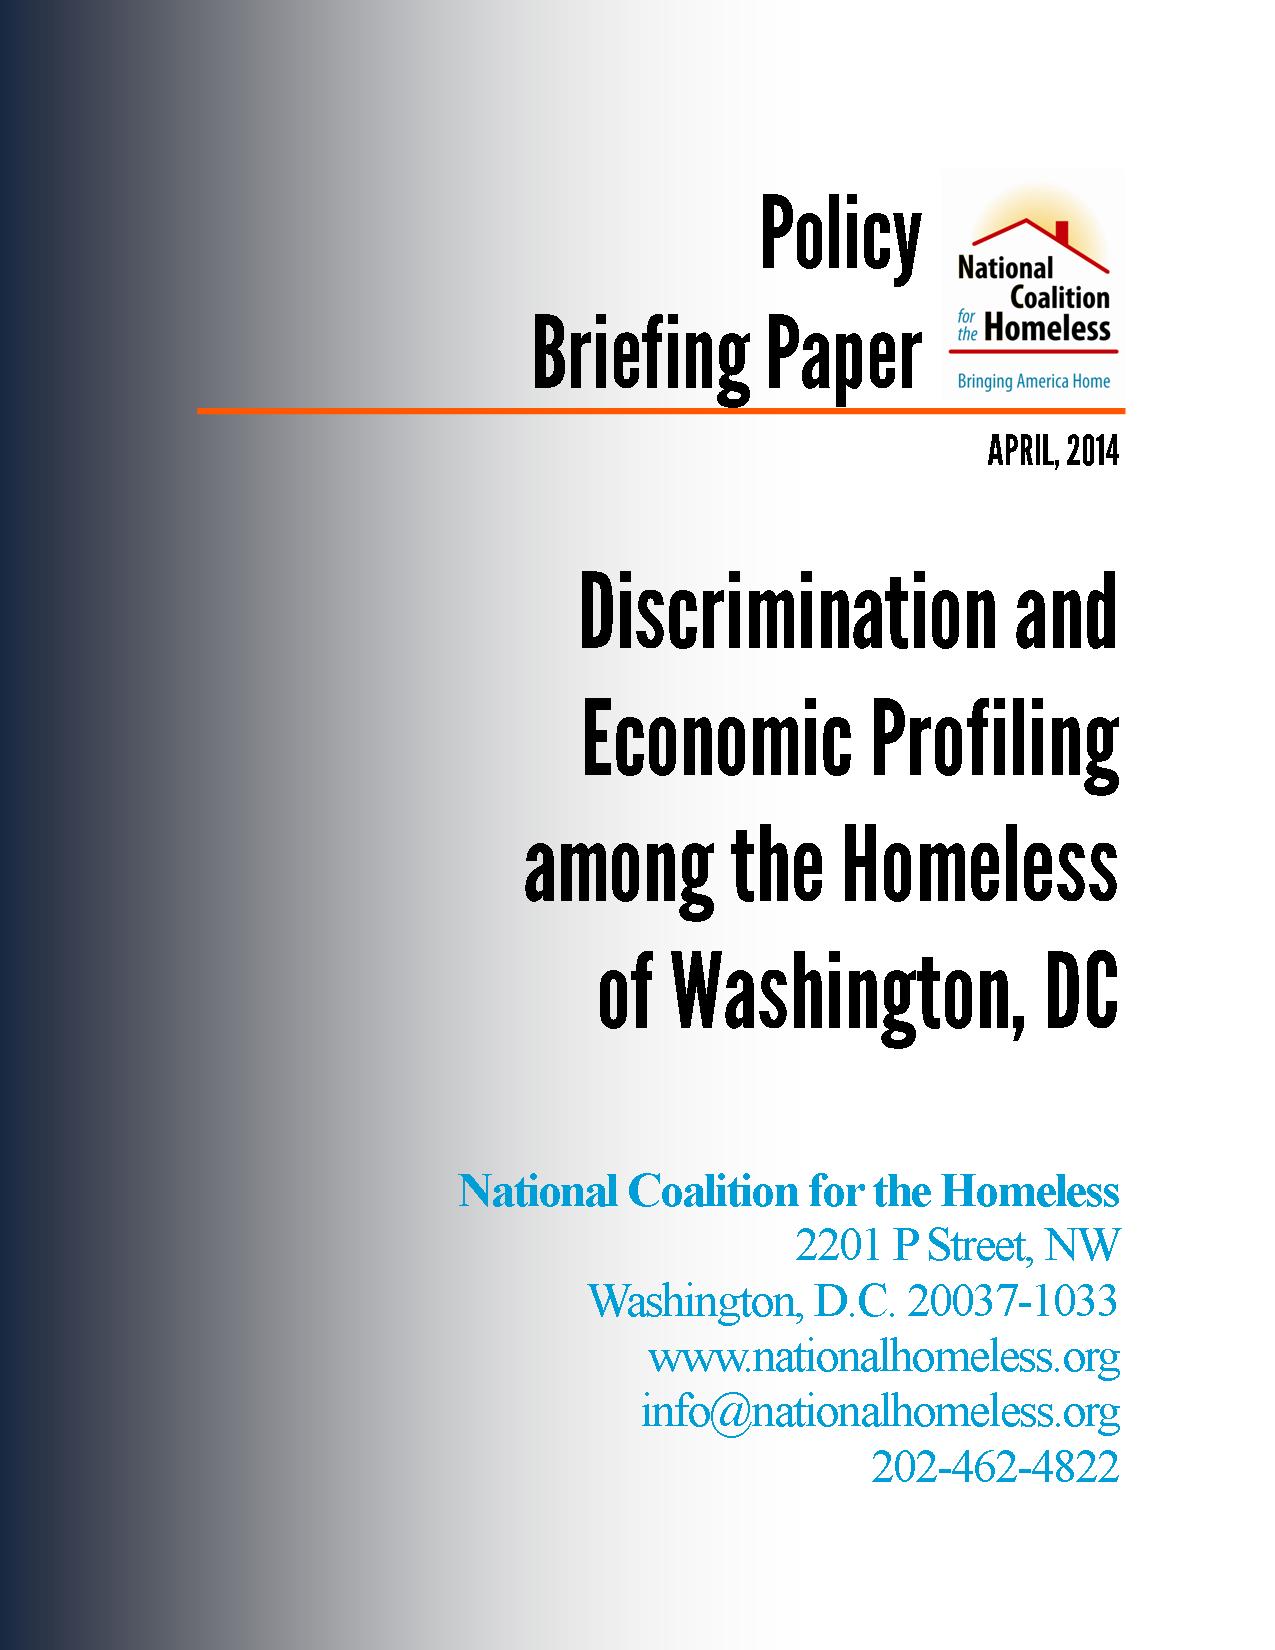 Discrimination and Economic Profiling Report